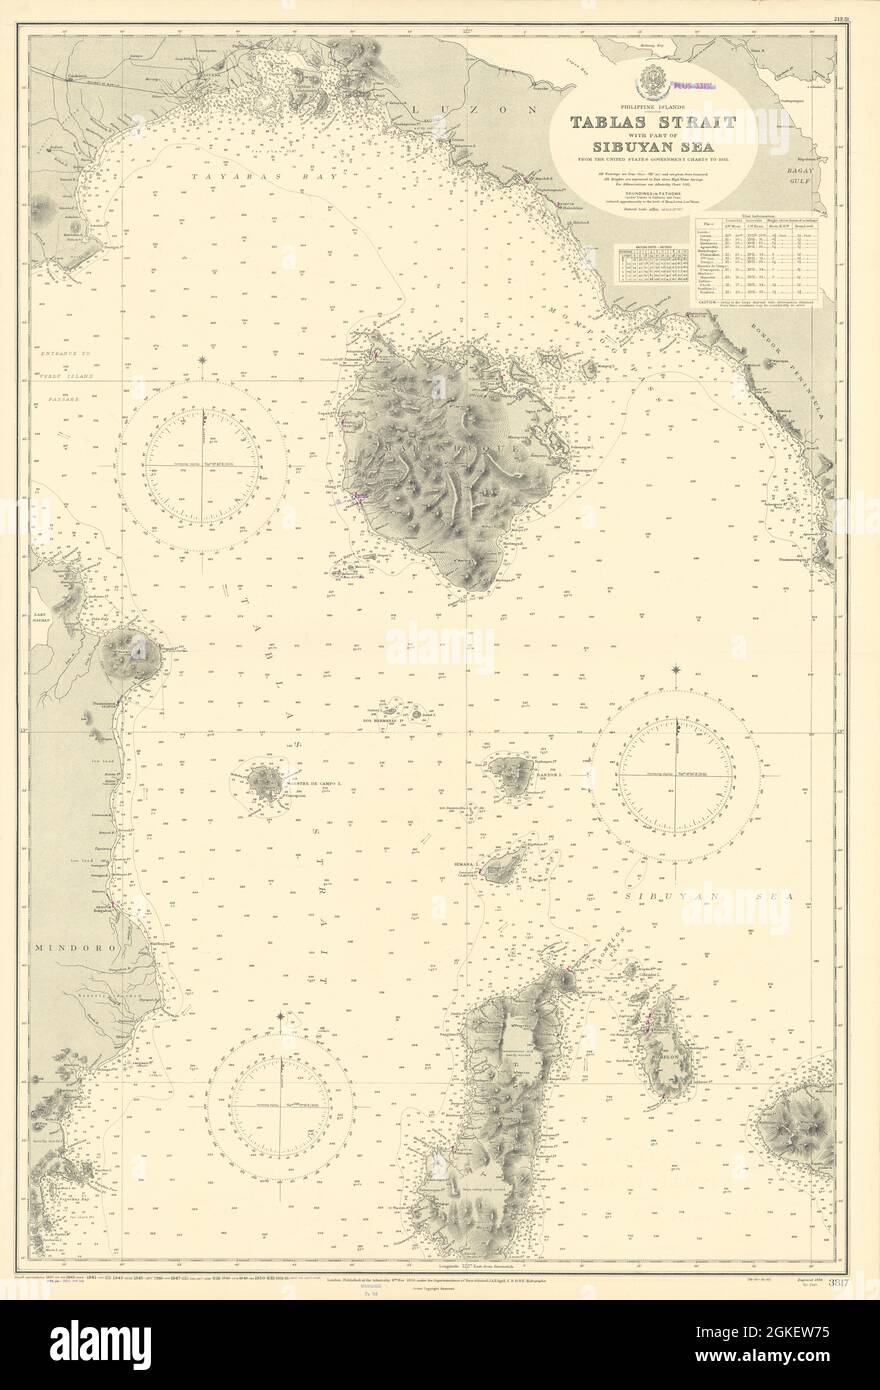 Filippine Tablas Luzon Mindoro Marinduque GRAFICO 1936 (1956) mappa Foto Stock